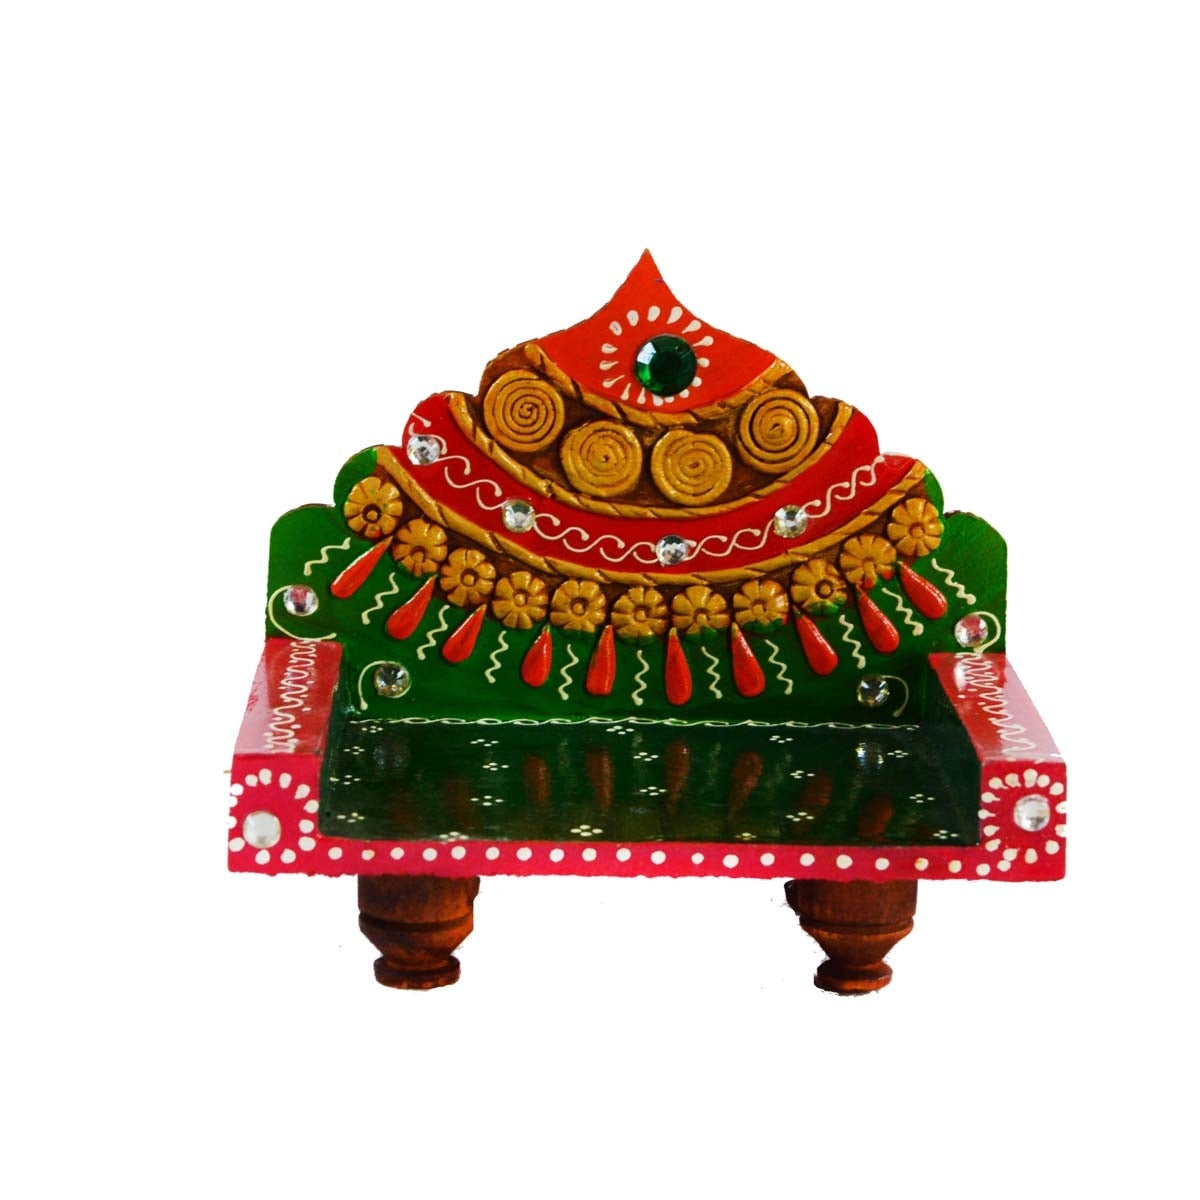 Royal Throne for Mandir(Temple)